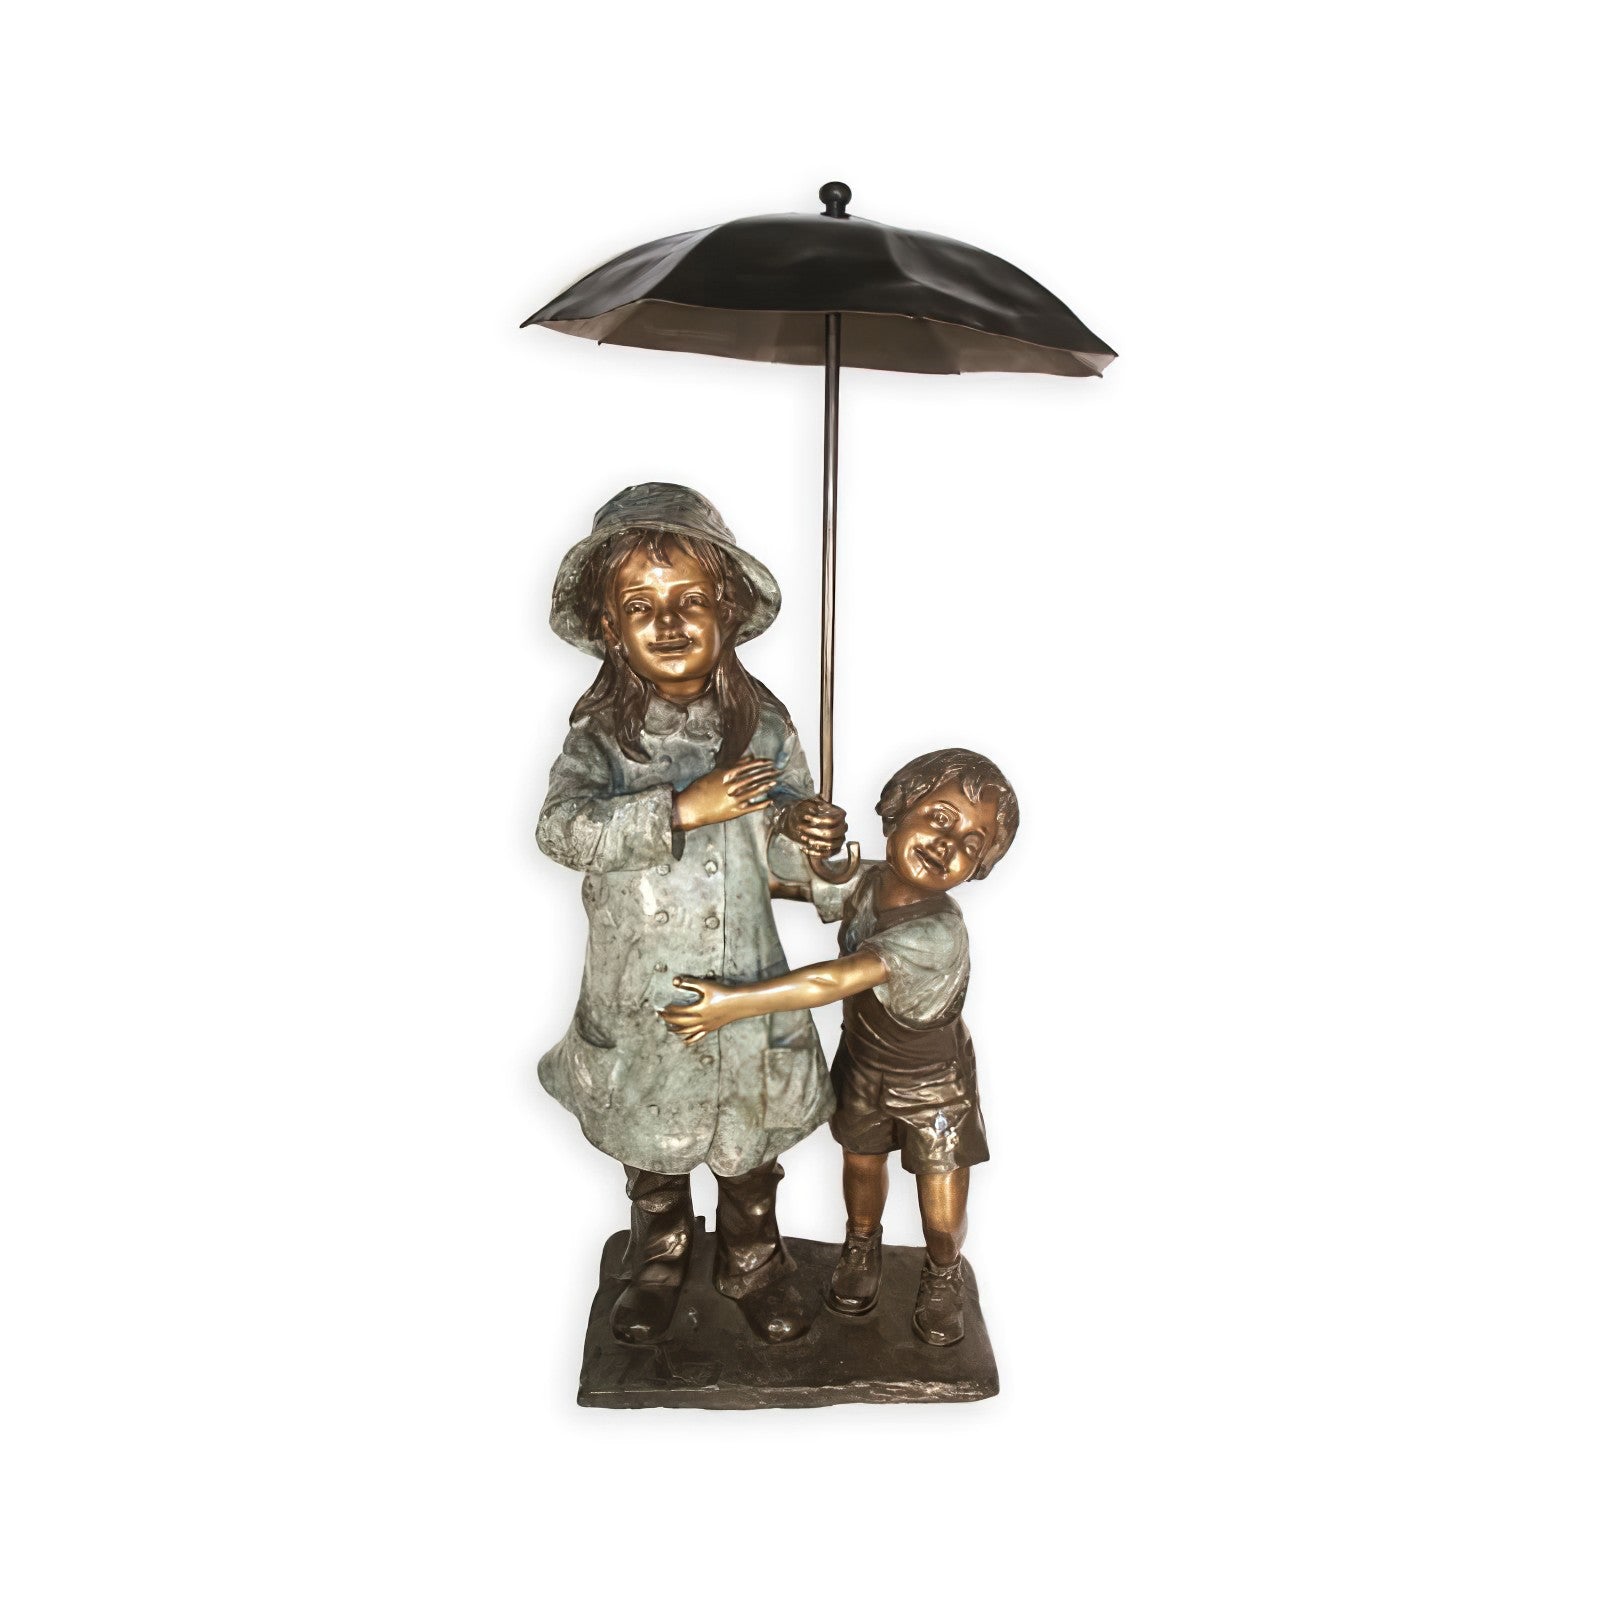 Boy and Girl with Umbrella